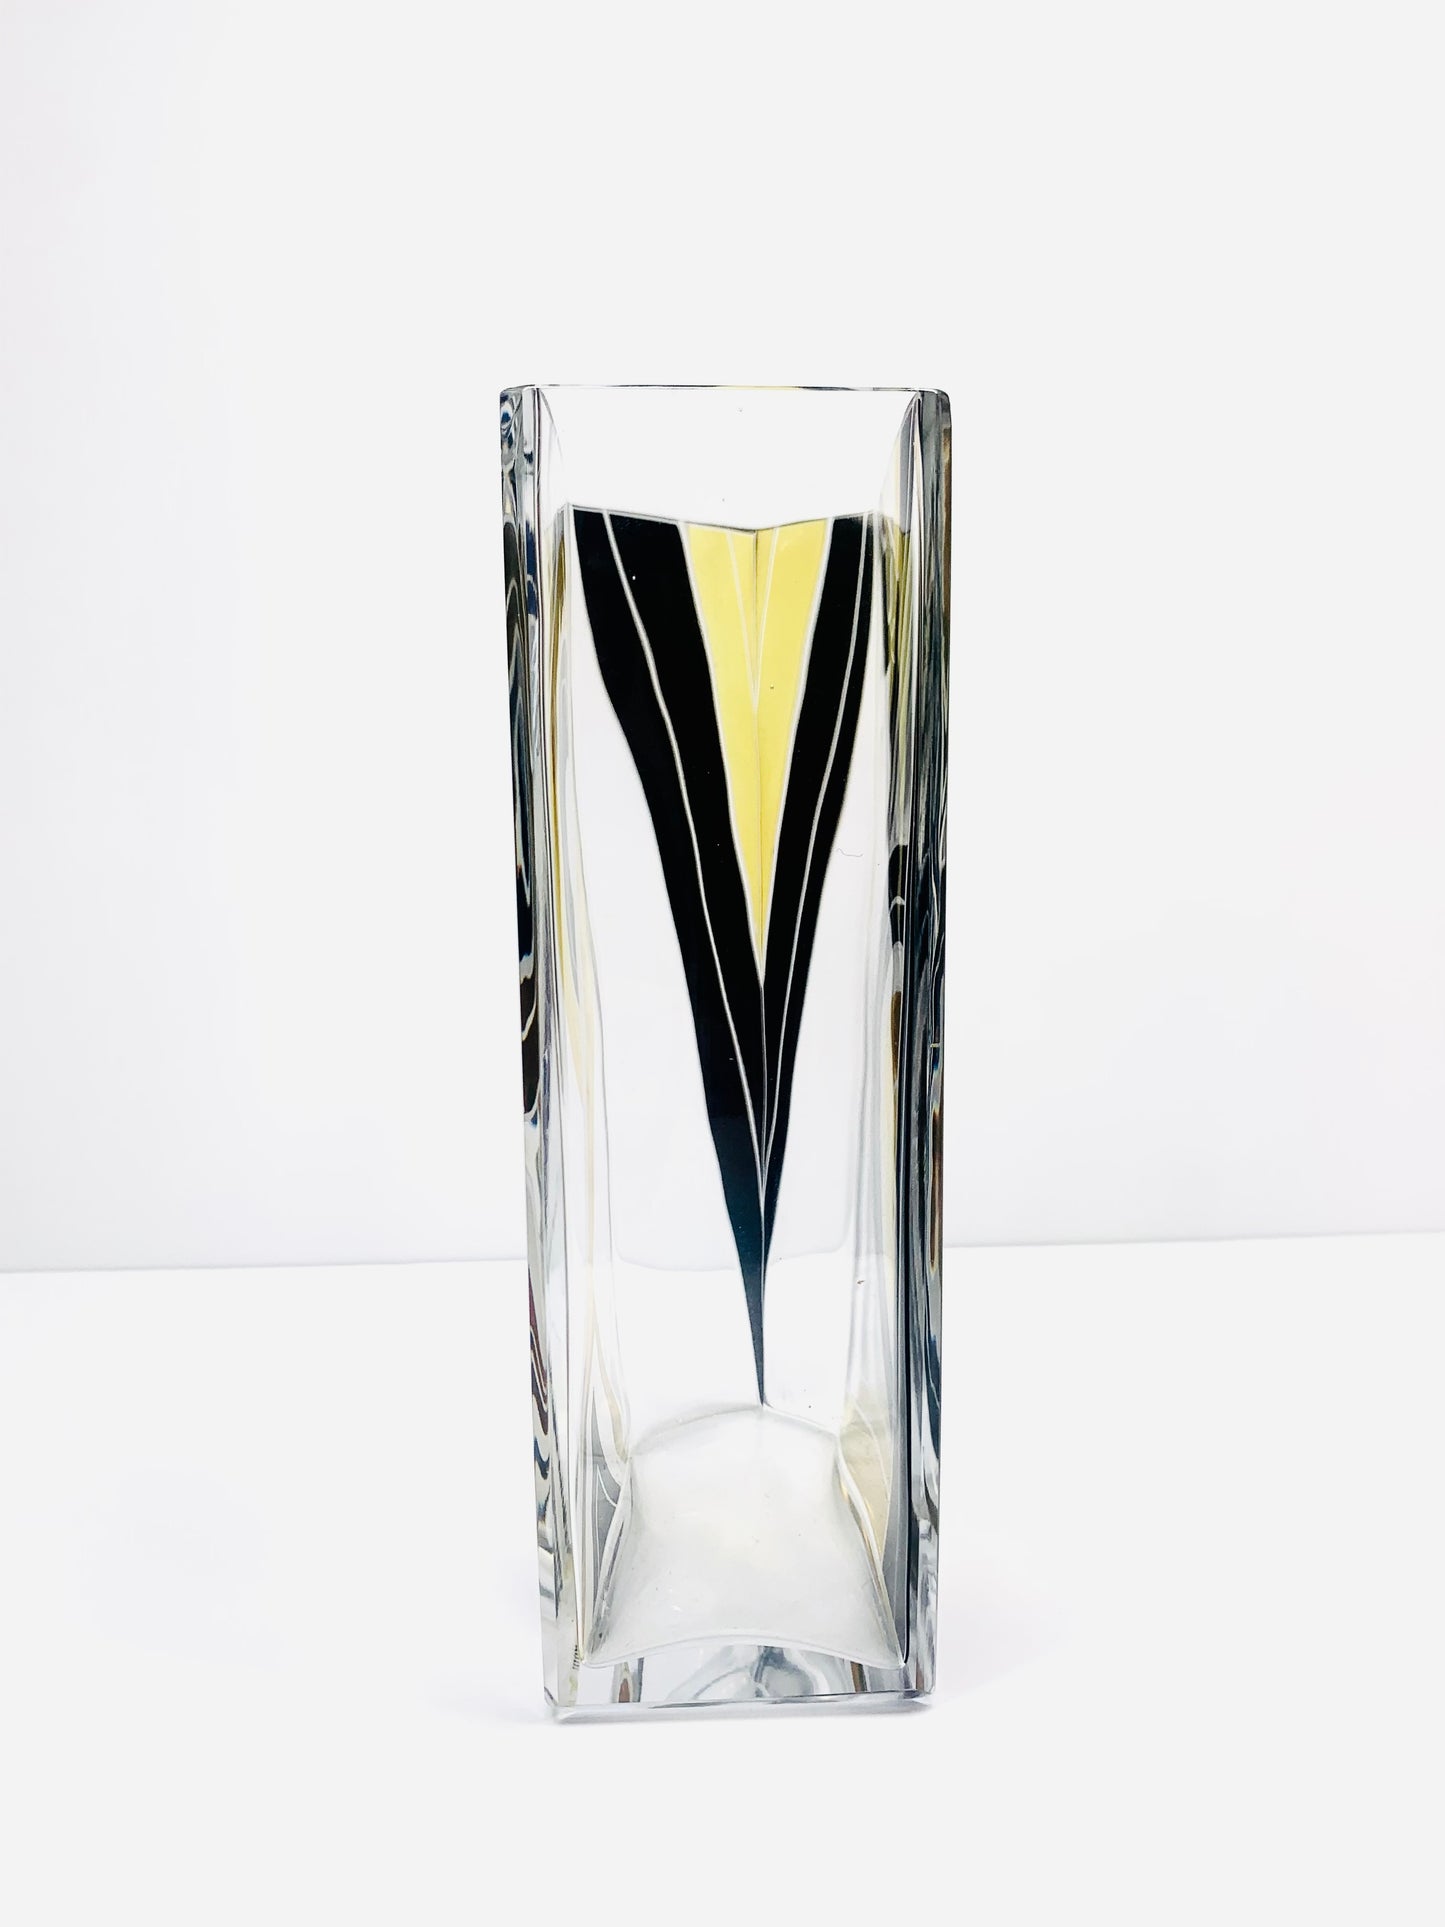 Antique Art Deco black and yellow enamel glass vase by Karl Palda